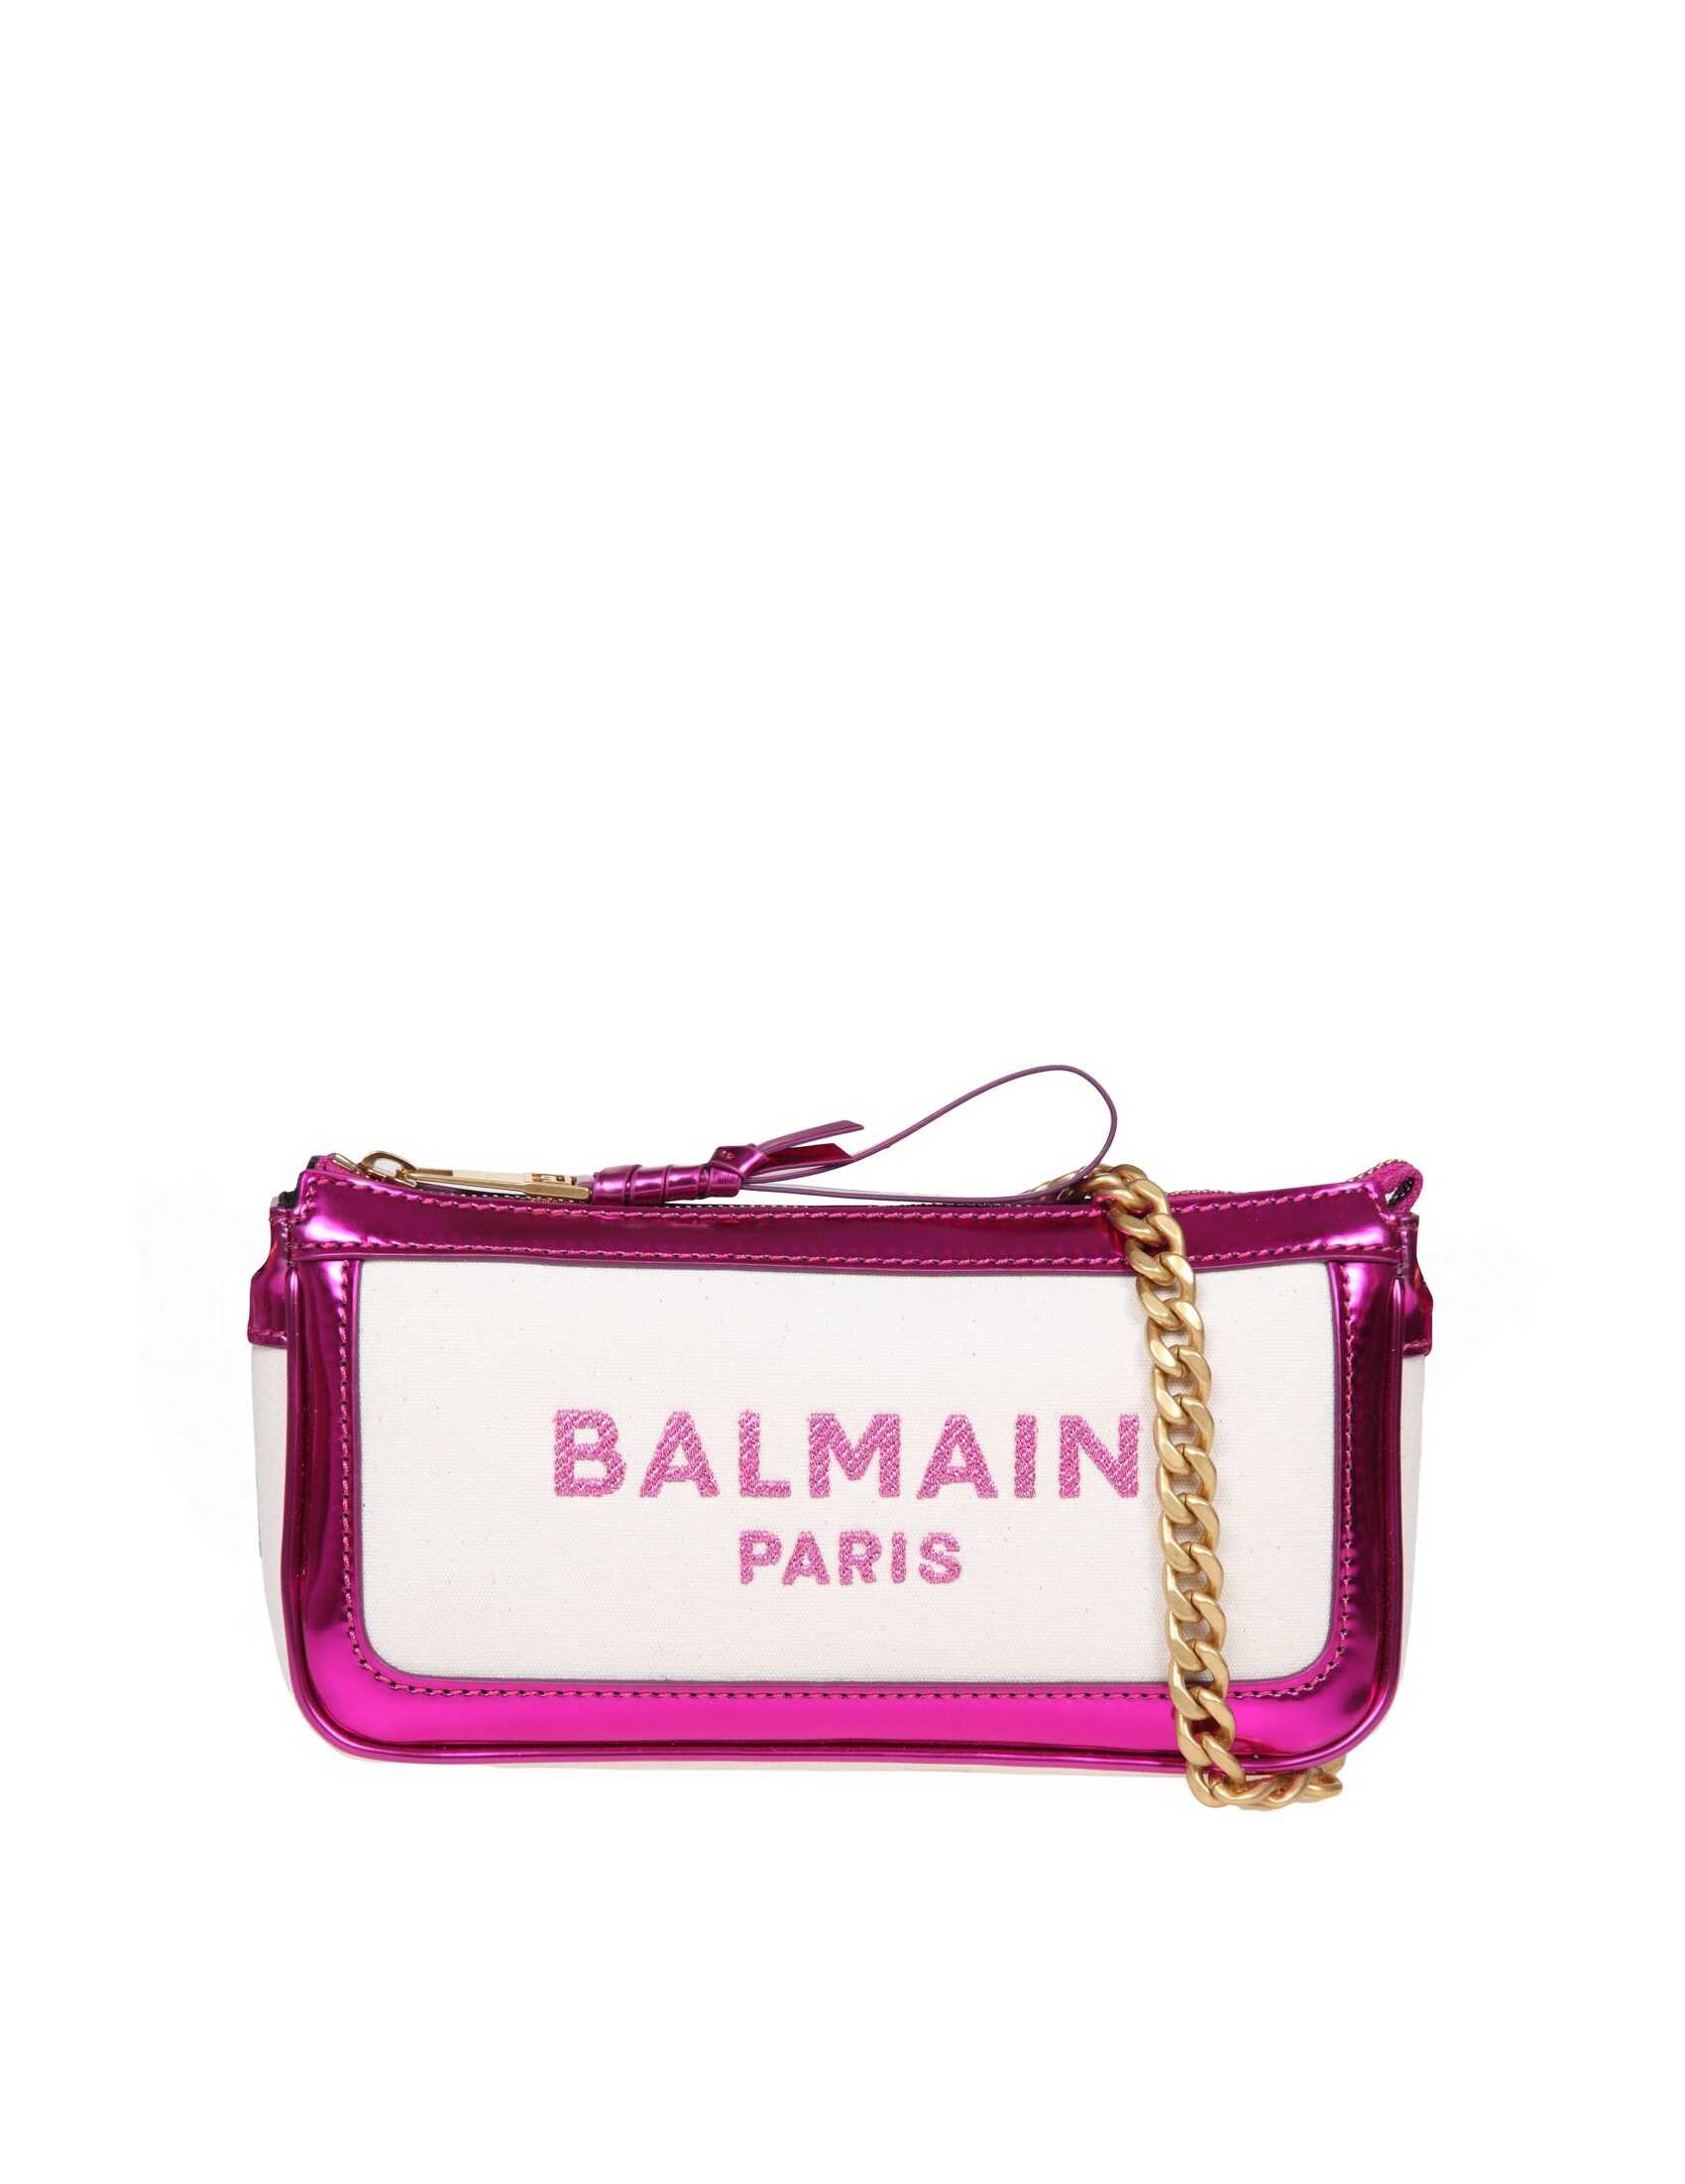 Balmain Balmain b-army clutch bag in canvas and leather Purple